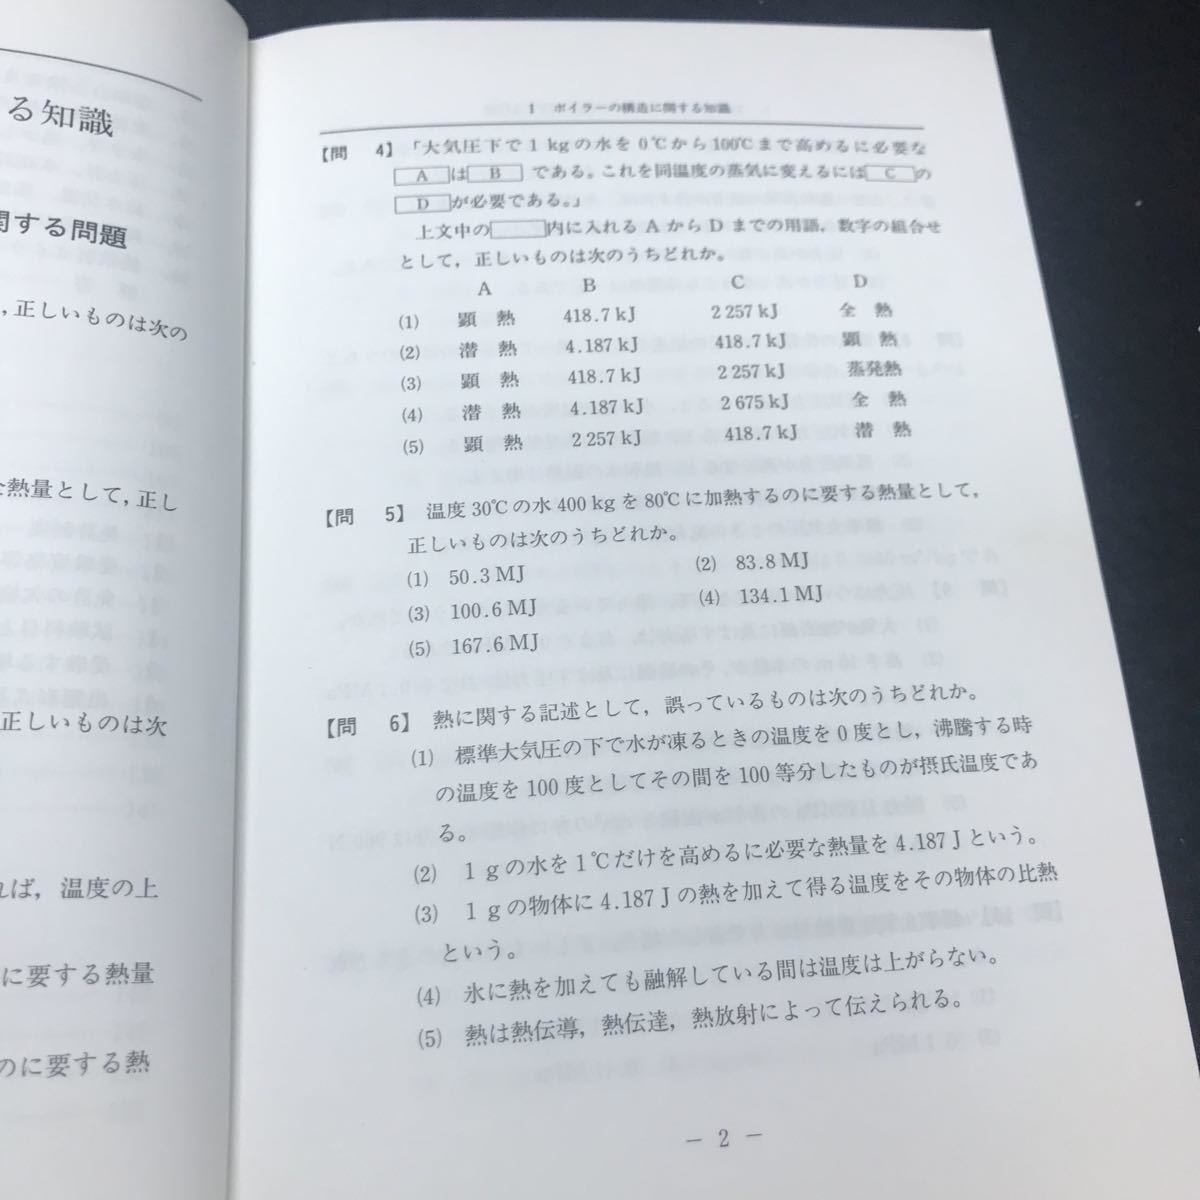 f-247 ニ級ボイラー技士免許試験準問題集 ボイラーの構造に関する知識 社団法人日本ボイラ協会 平成15年改訂2版第1刷発行 ※5 _画像4